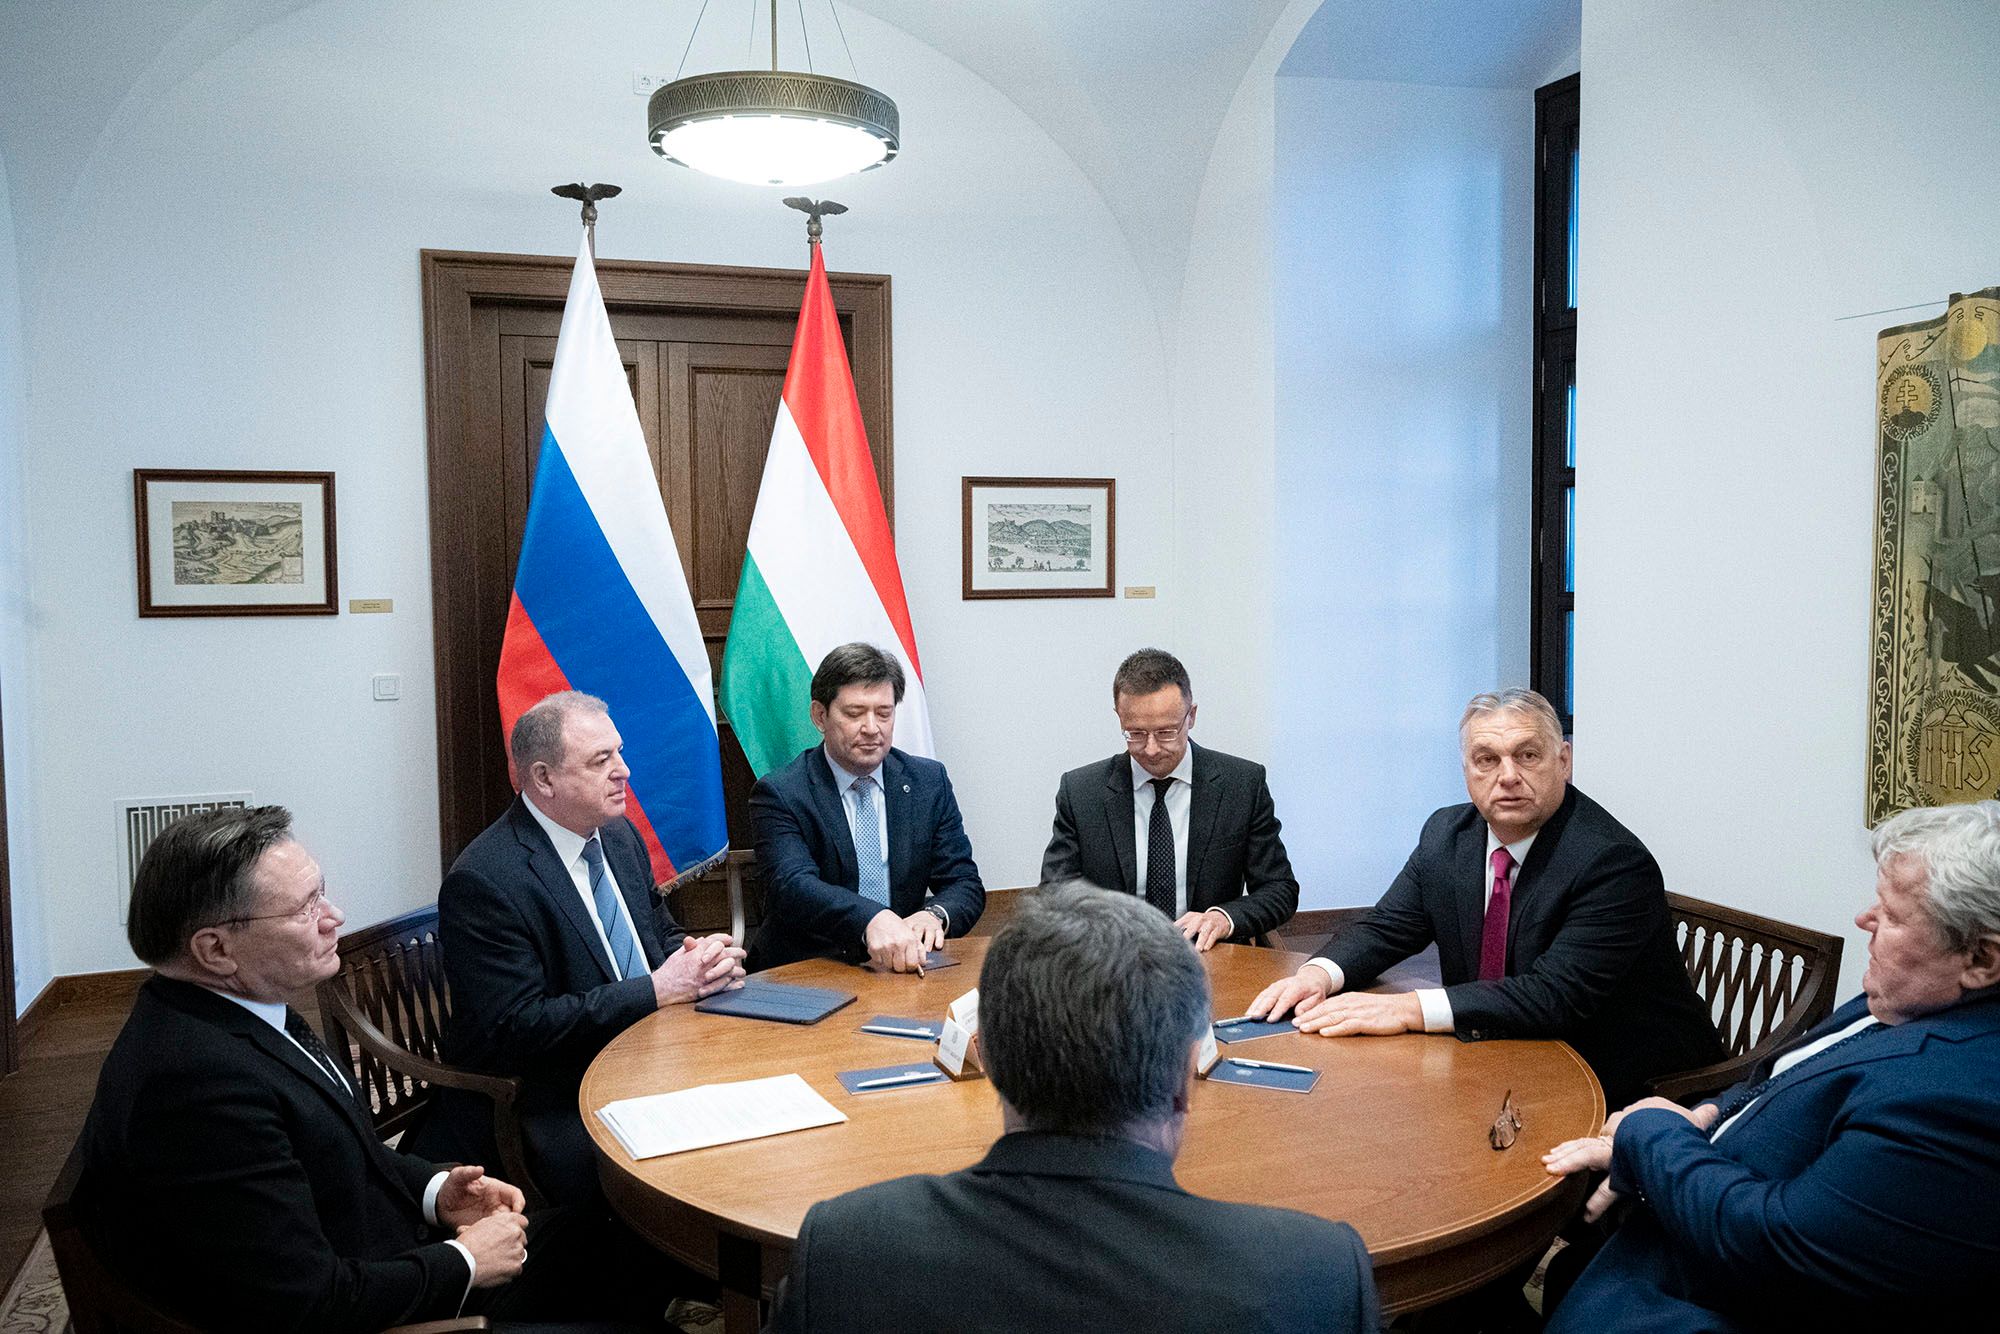 ROSATOM's CEO Alexey Likhachev held talks with Hungarian Prime Minister Viktor Orban